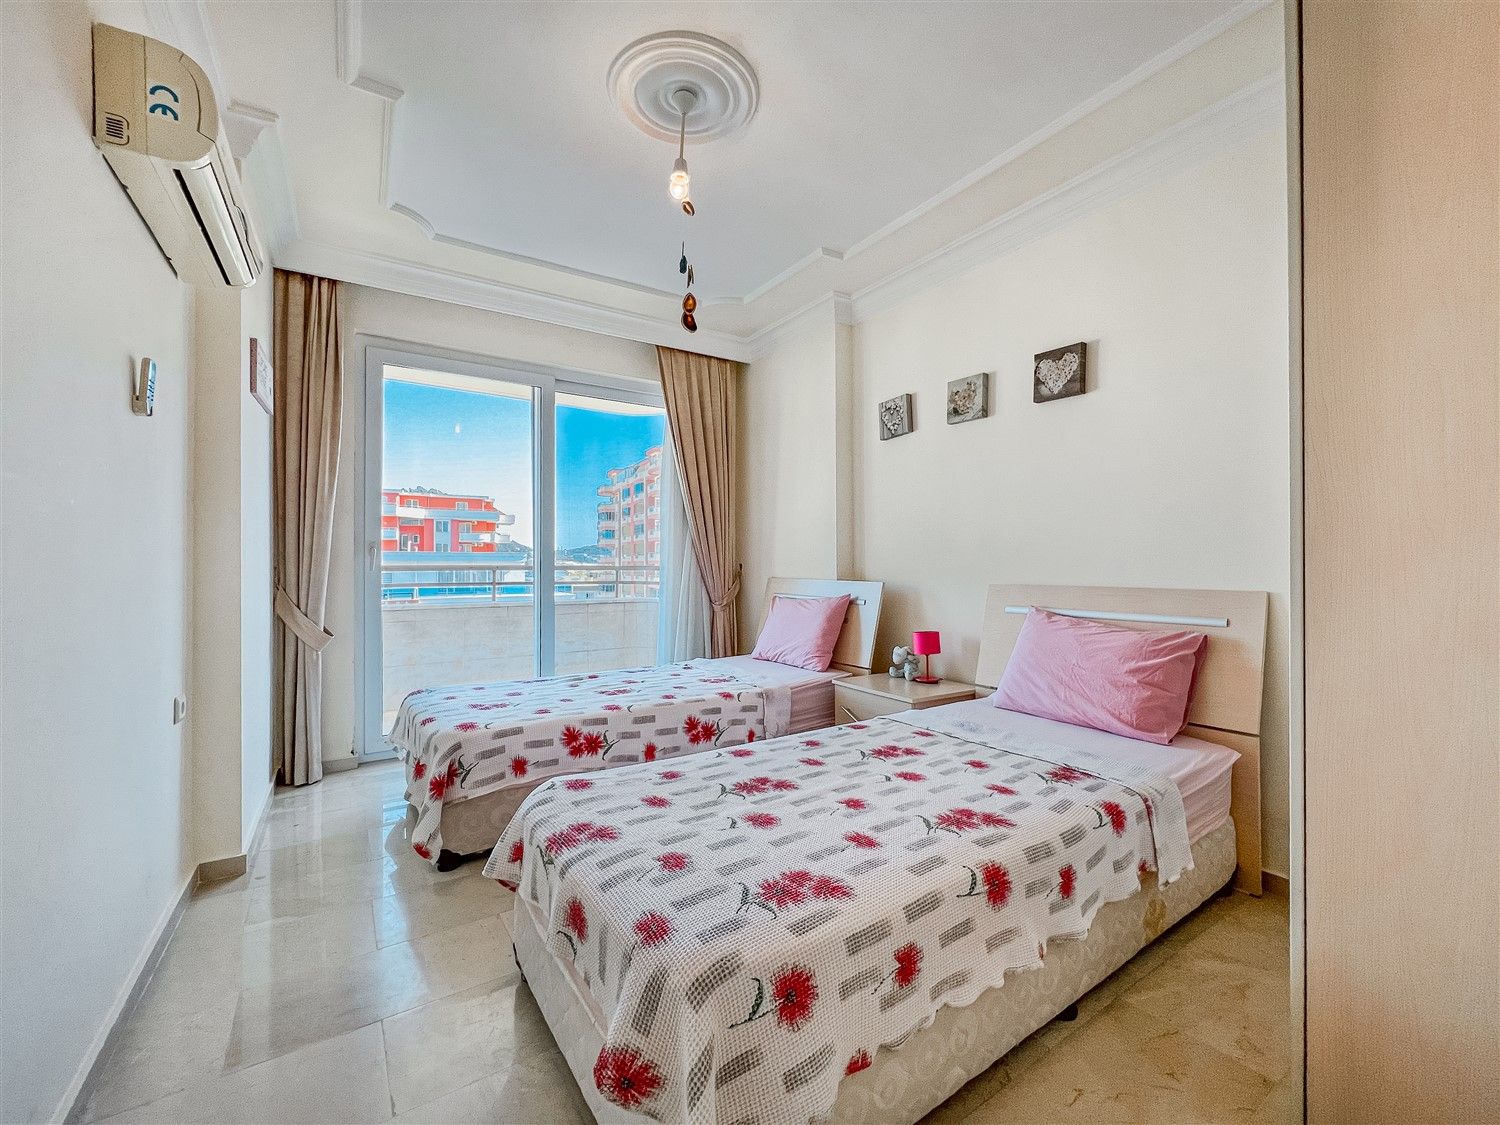 2 bedrooms apartment in popular district - Mahmutlar